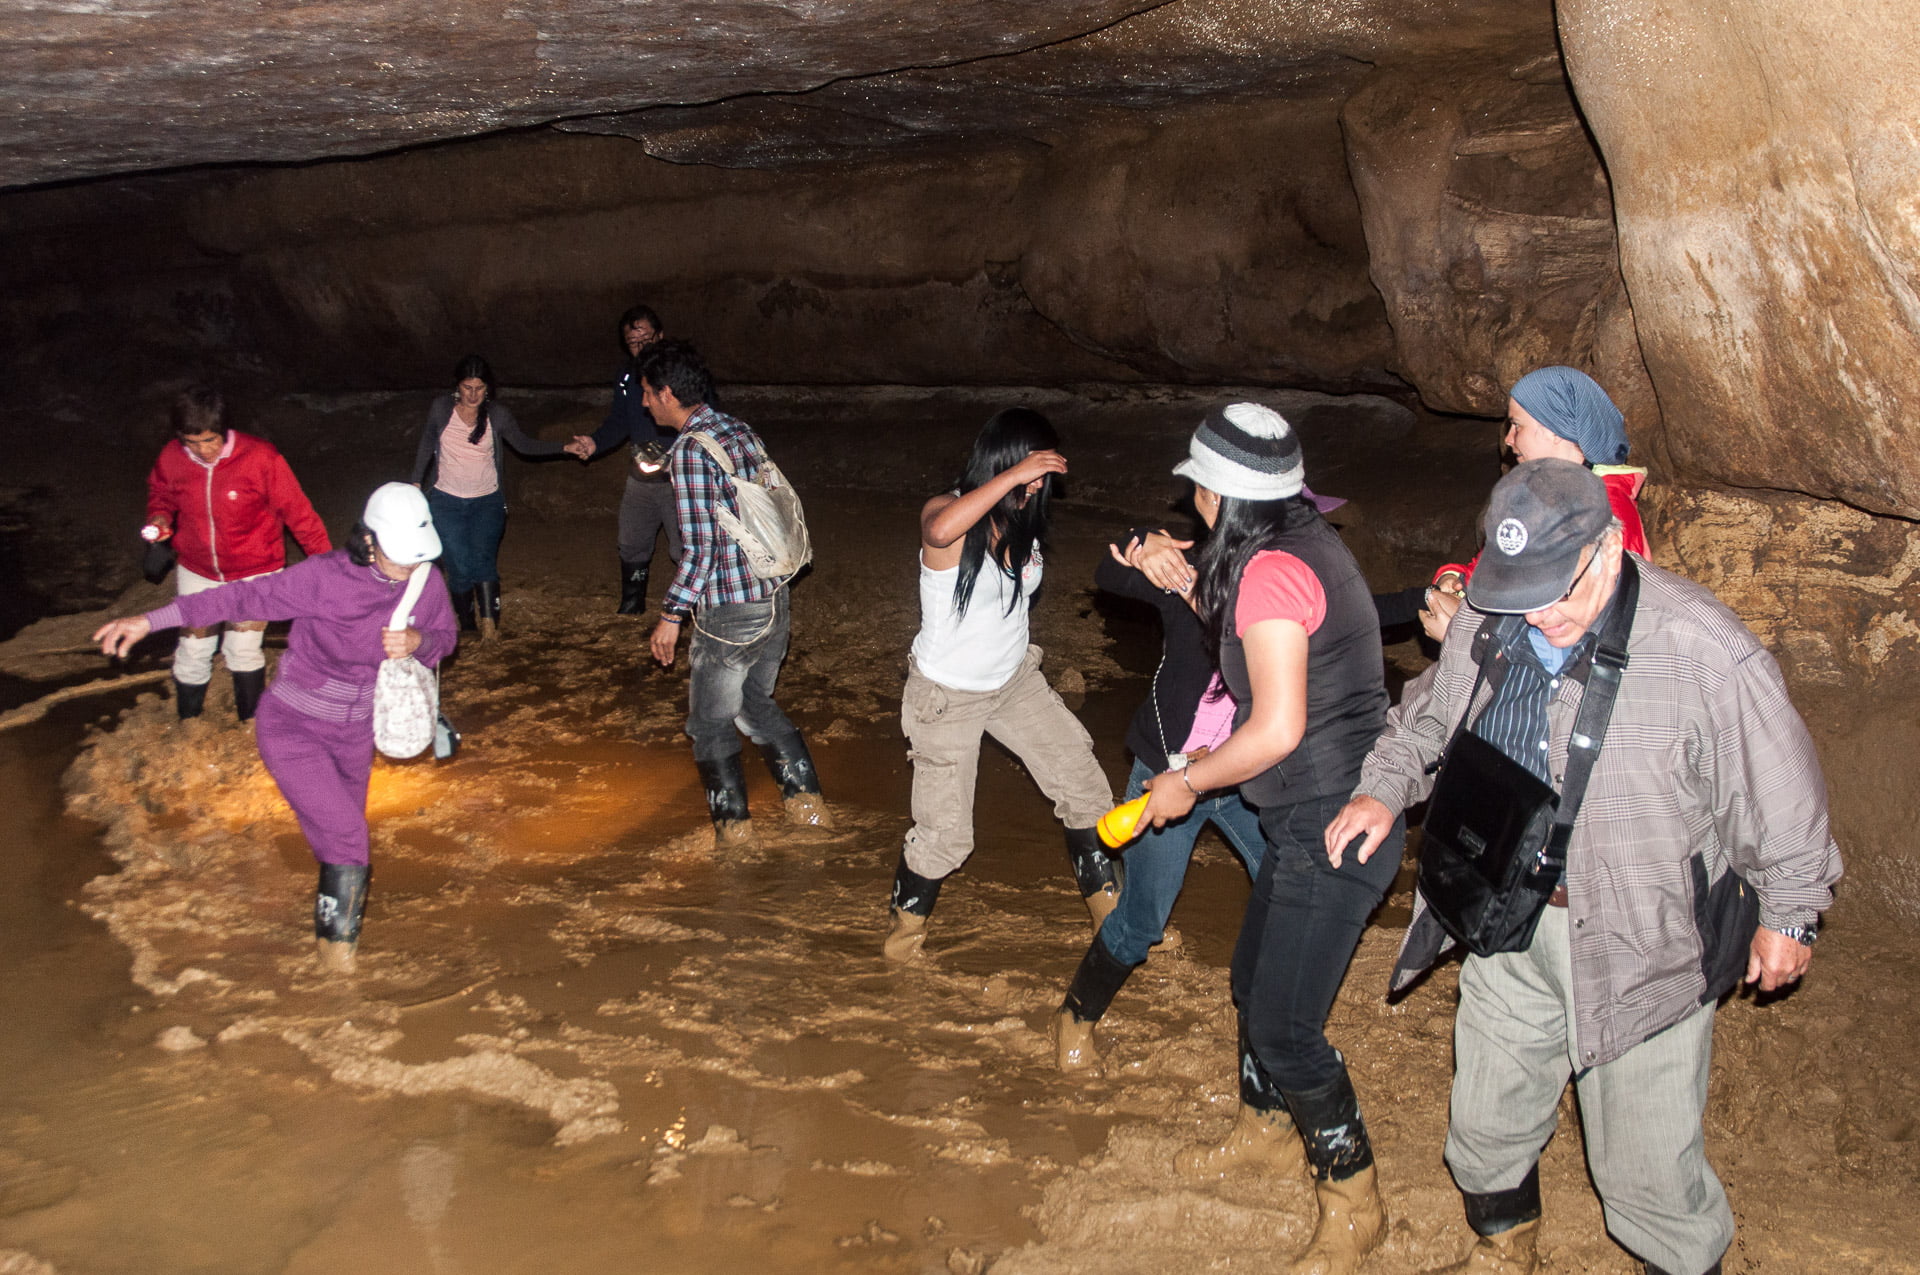 chachapoyas grotte - Les globe blogueurs - blog voyage nature